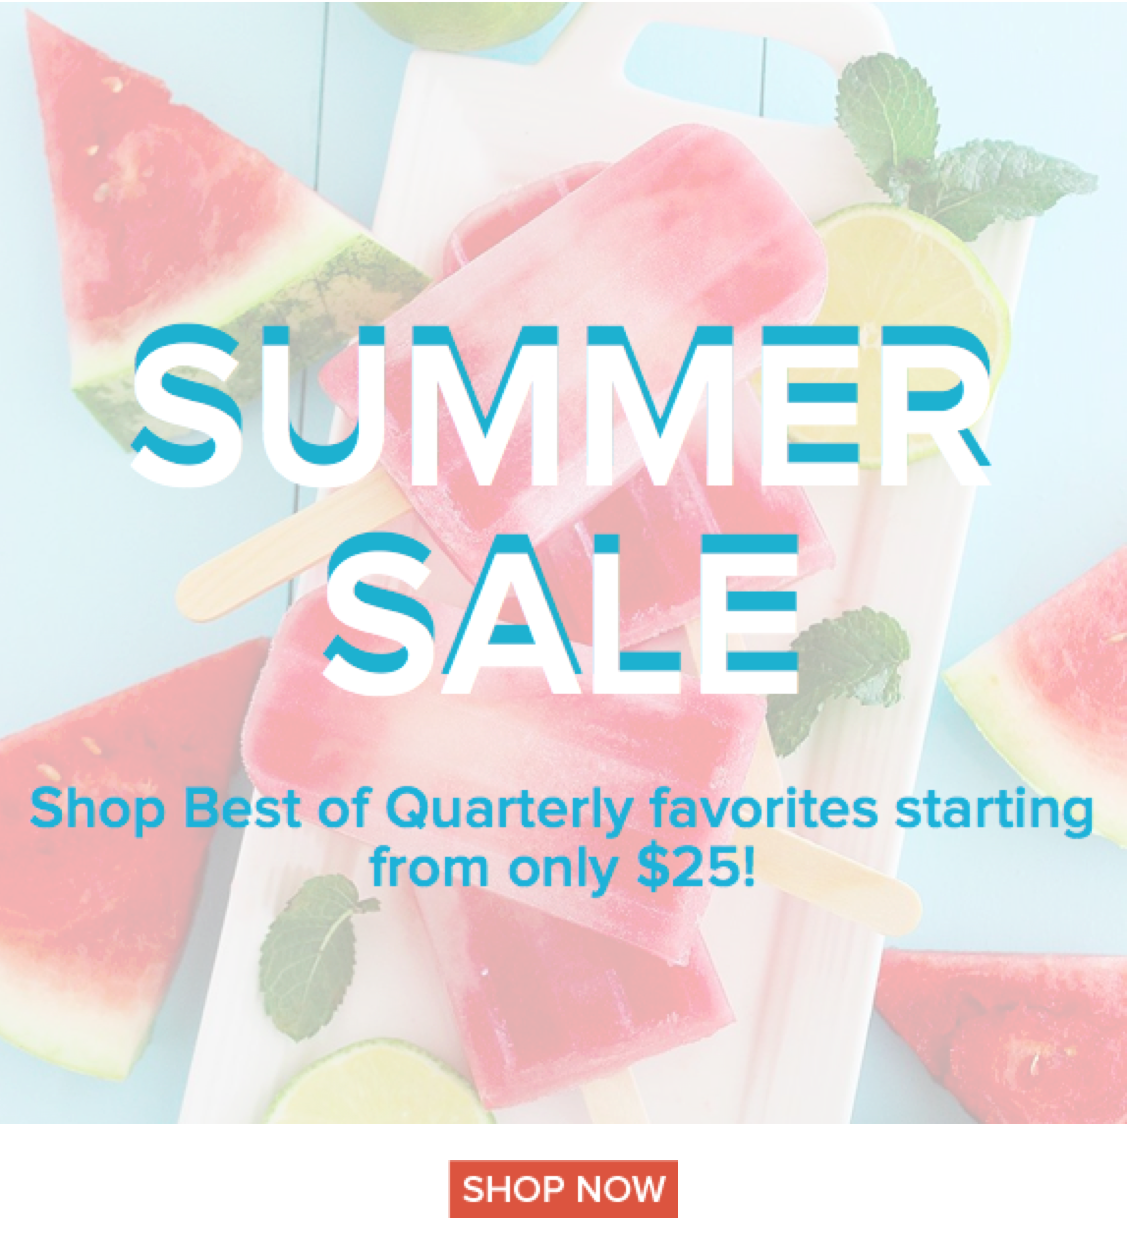 Quarterly Co. Summer Sale, 50% off!